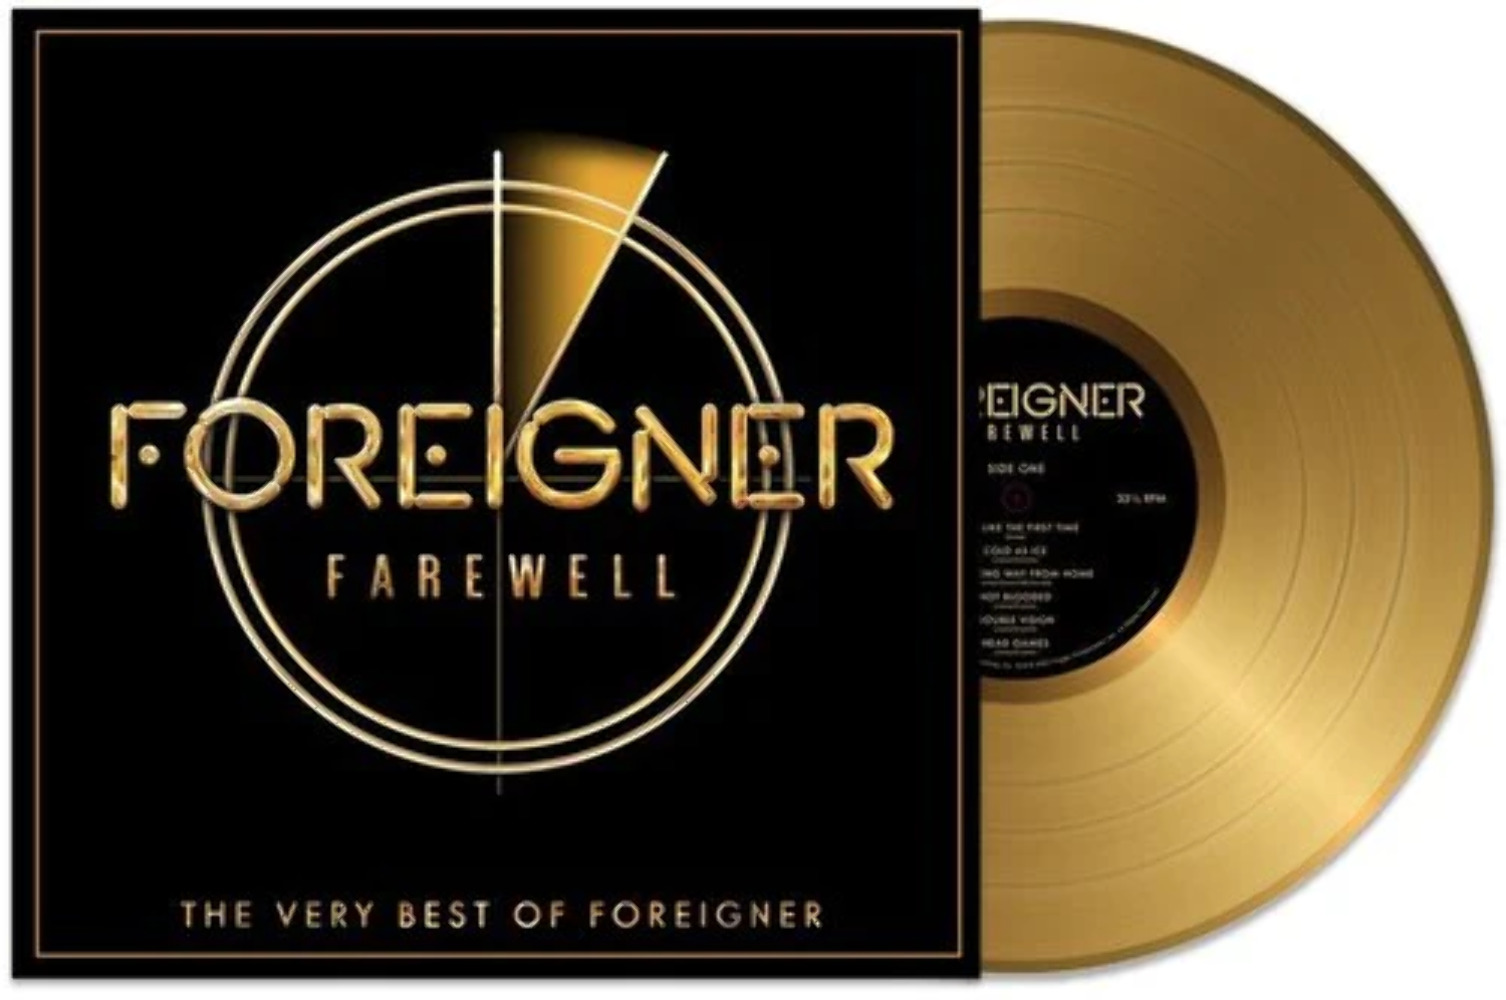 Foreigner - Farewell: The Very Best Of Foreigner [Gold Vinyl] NEW Sealed Vinyl